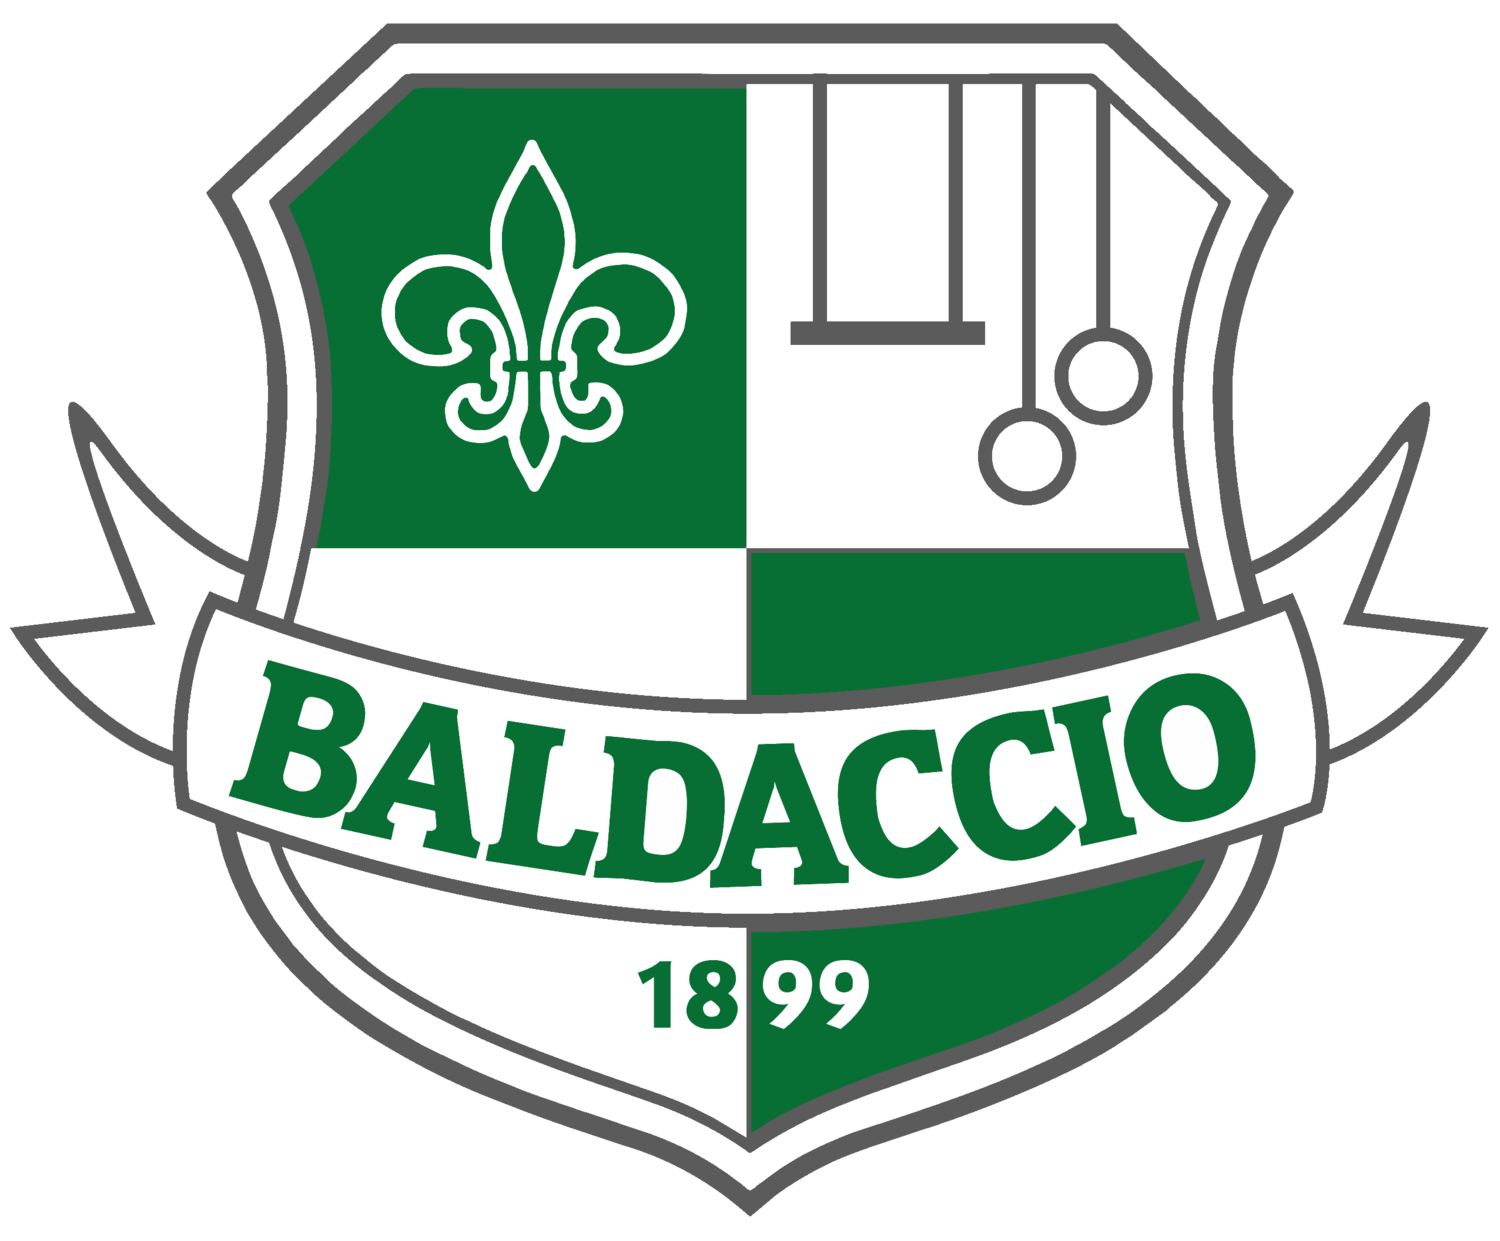 Wappen Baldaccio Bruni